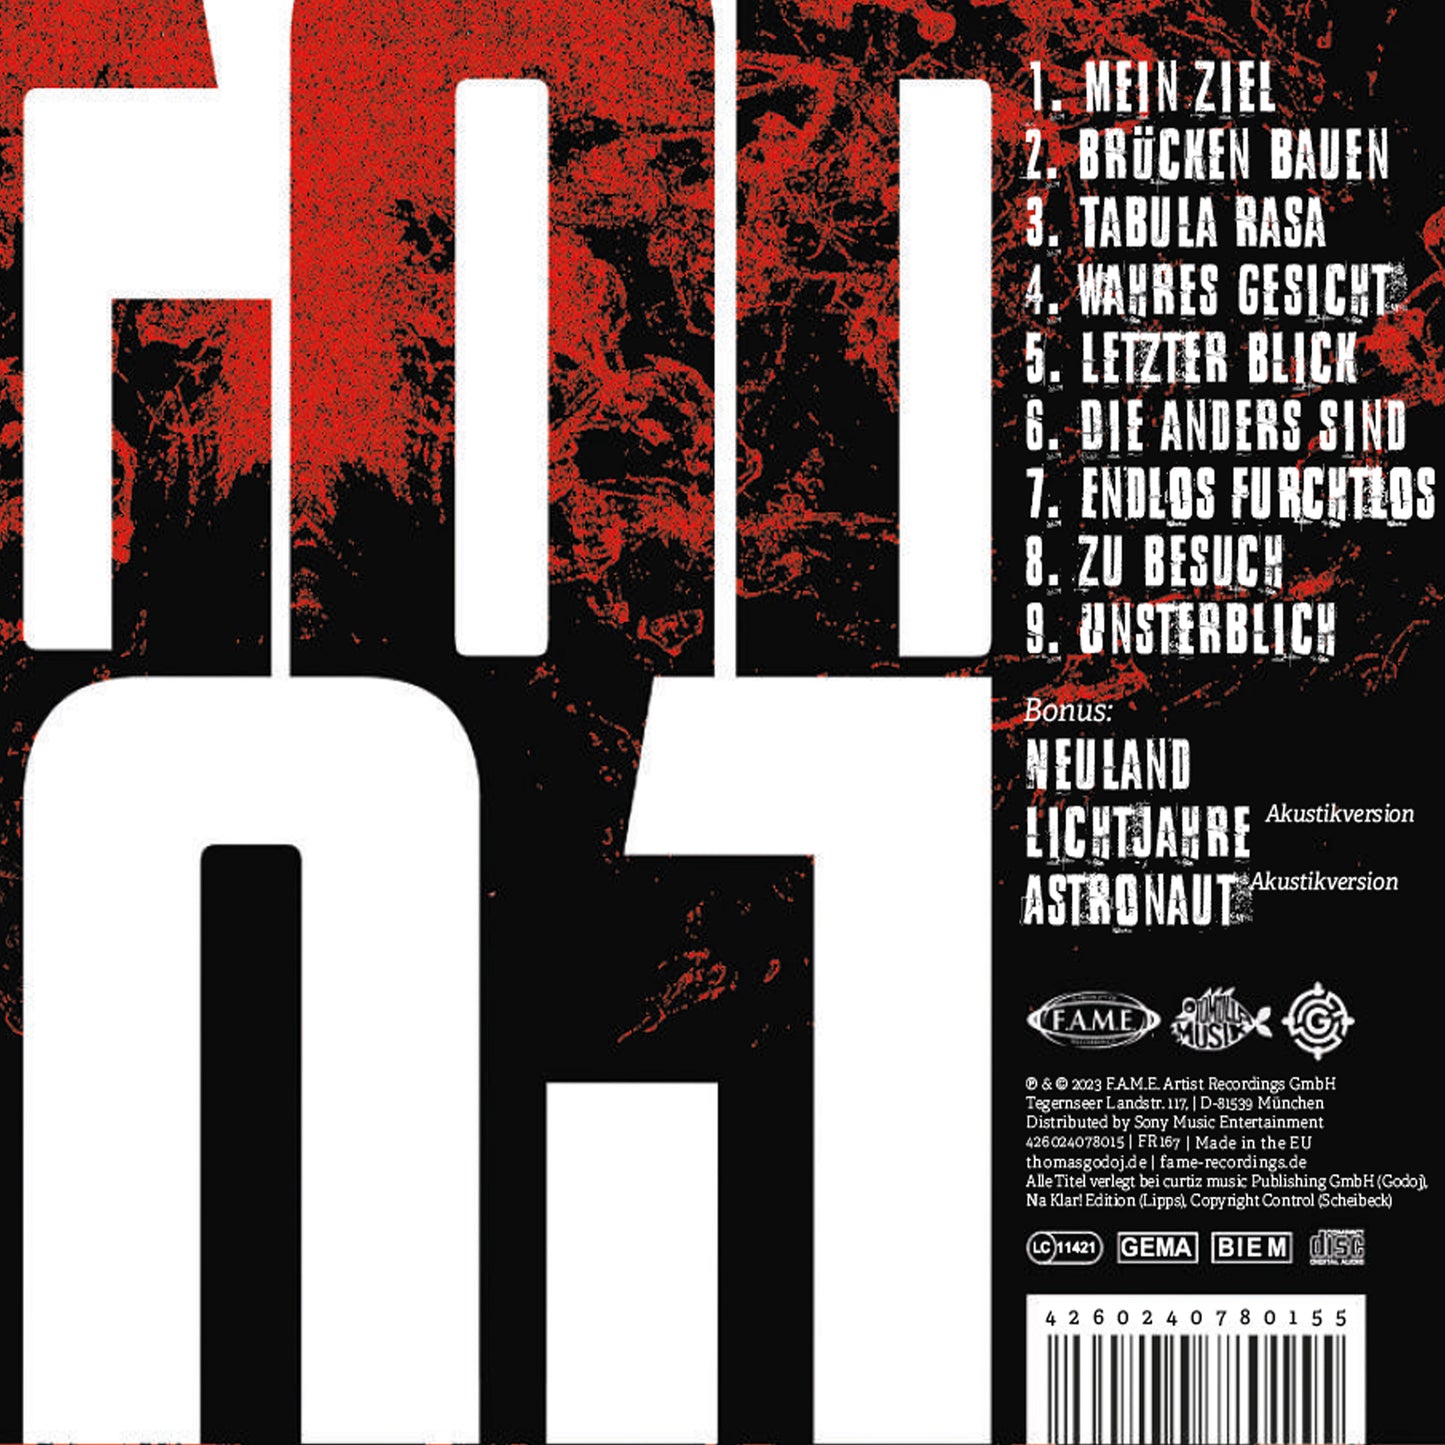 THOMAS GODOJ - Album des Jahres CD